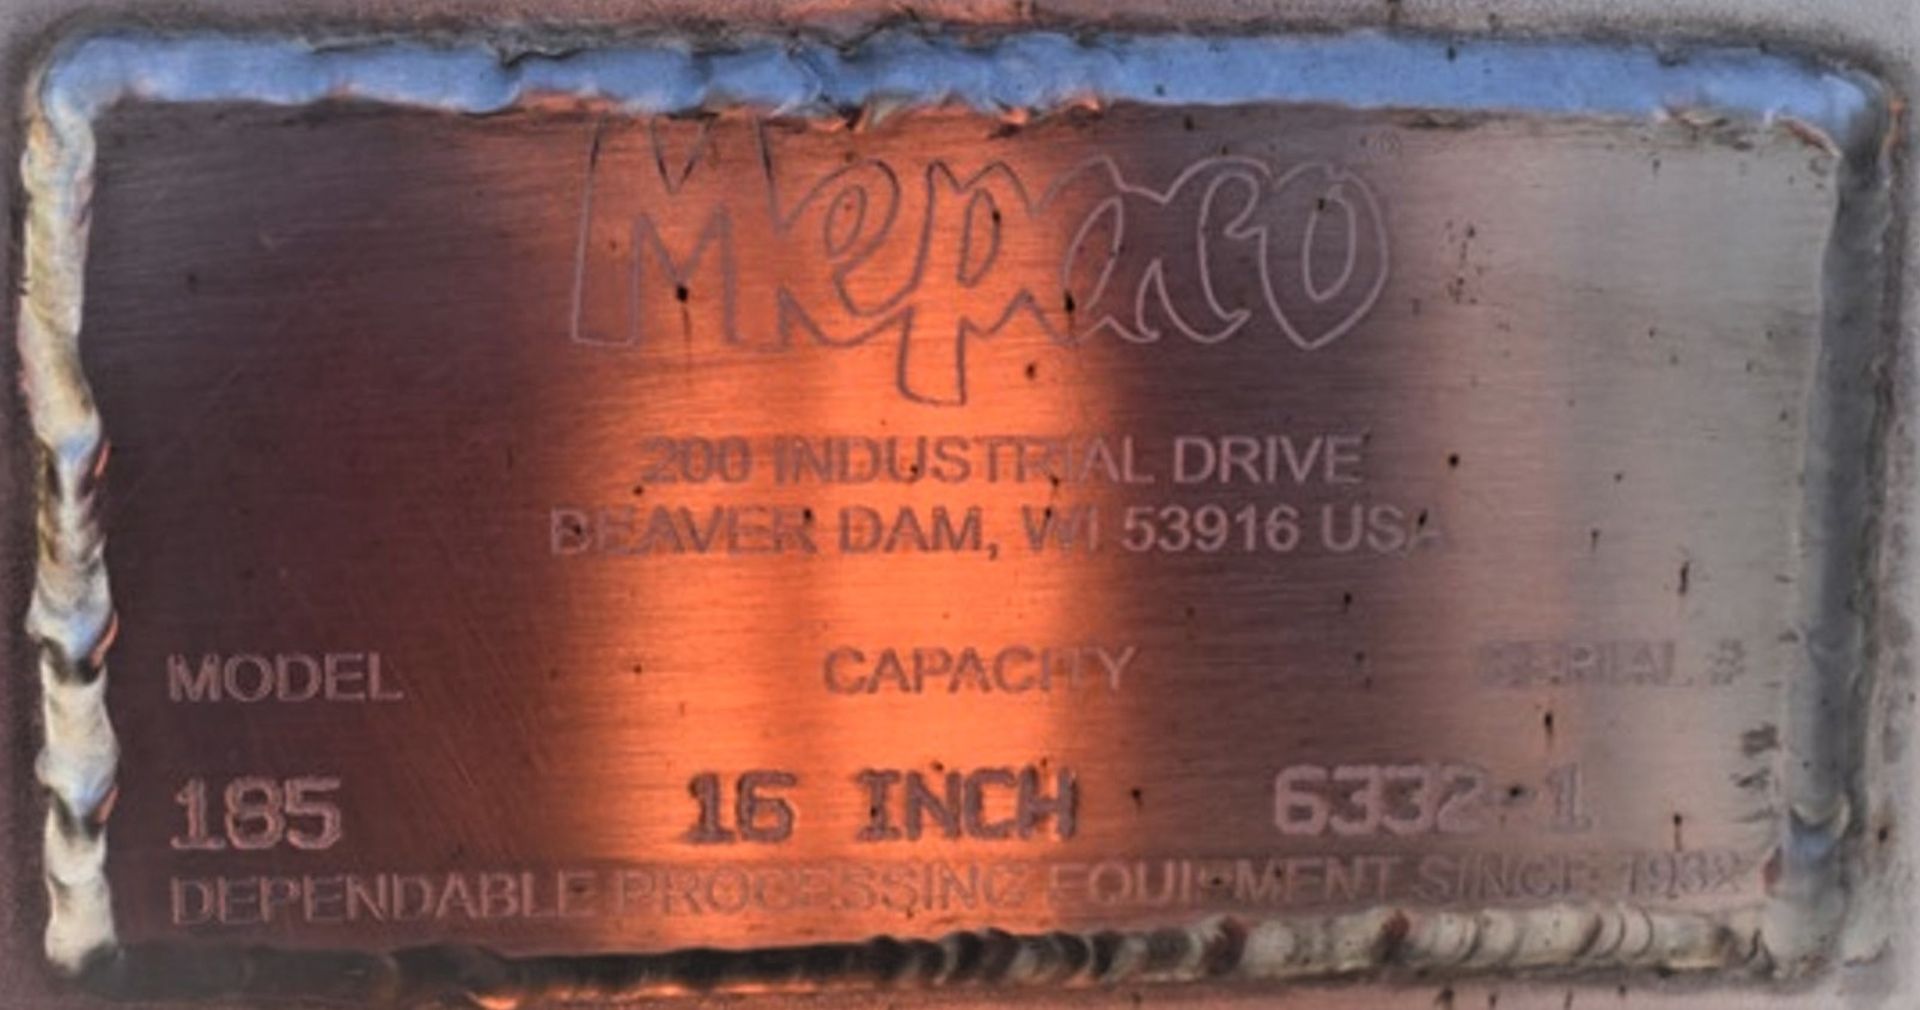 Mepaco S/S Sanitary Incline Screw/Auger Conveyor, Model 185, S/N 6332-1 with16" Diameter Hopper, - Image 17 of 18